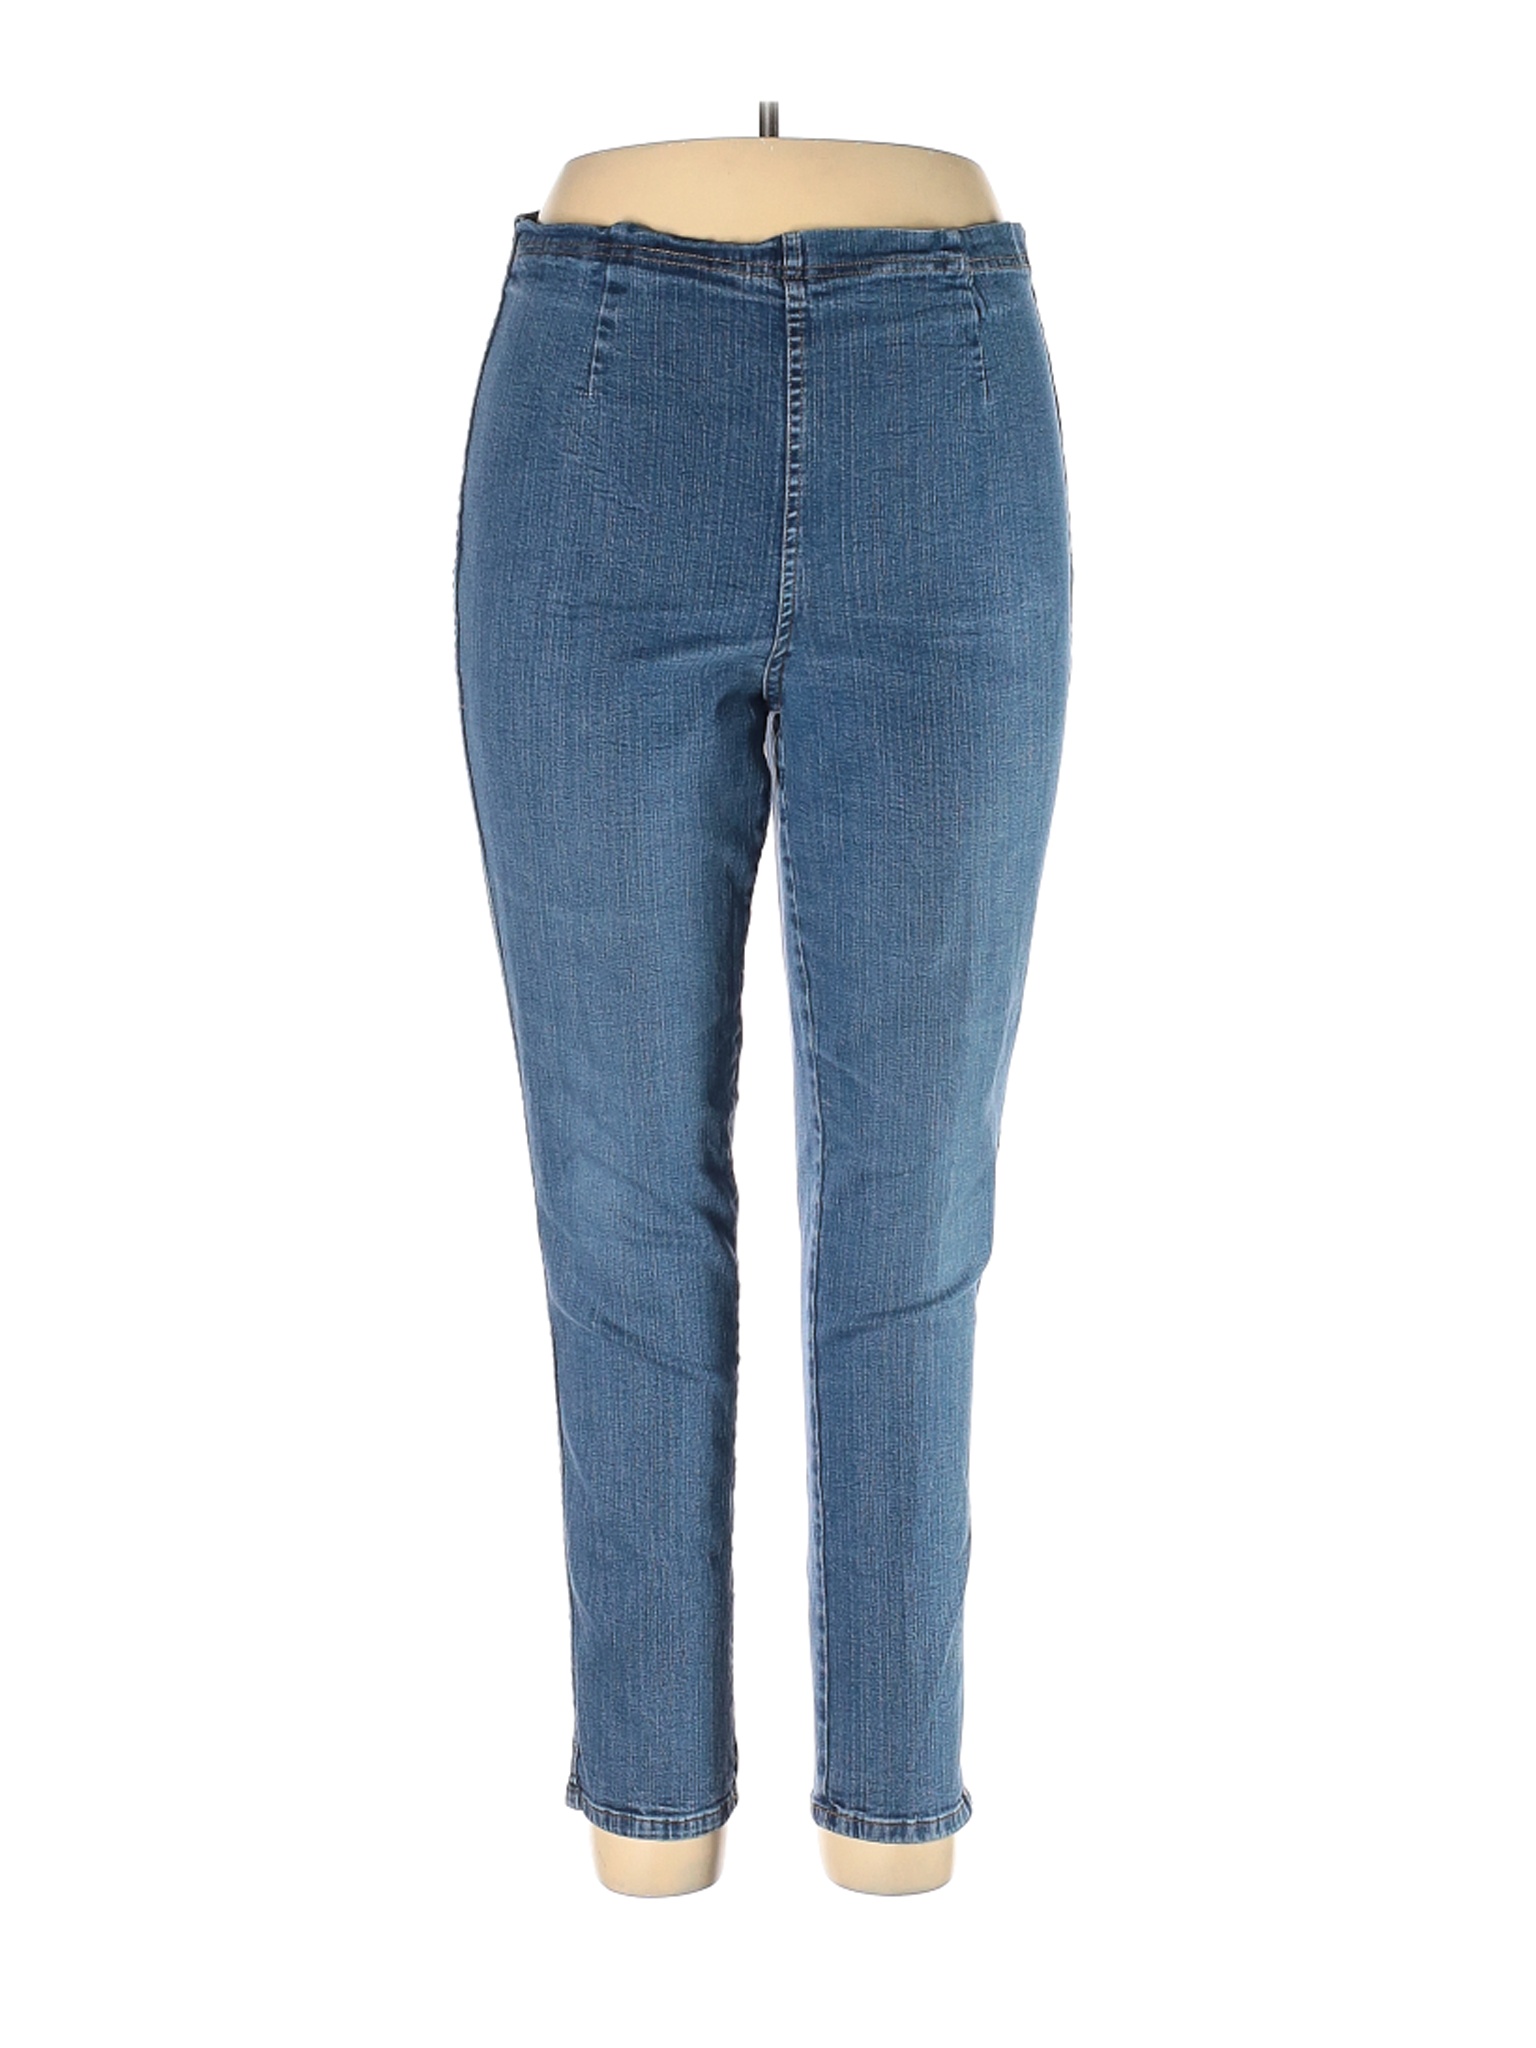 White Stag Women Blue Jeans 18 Plus | eBay